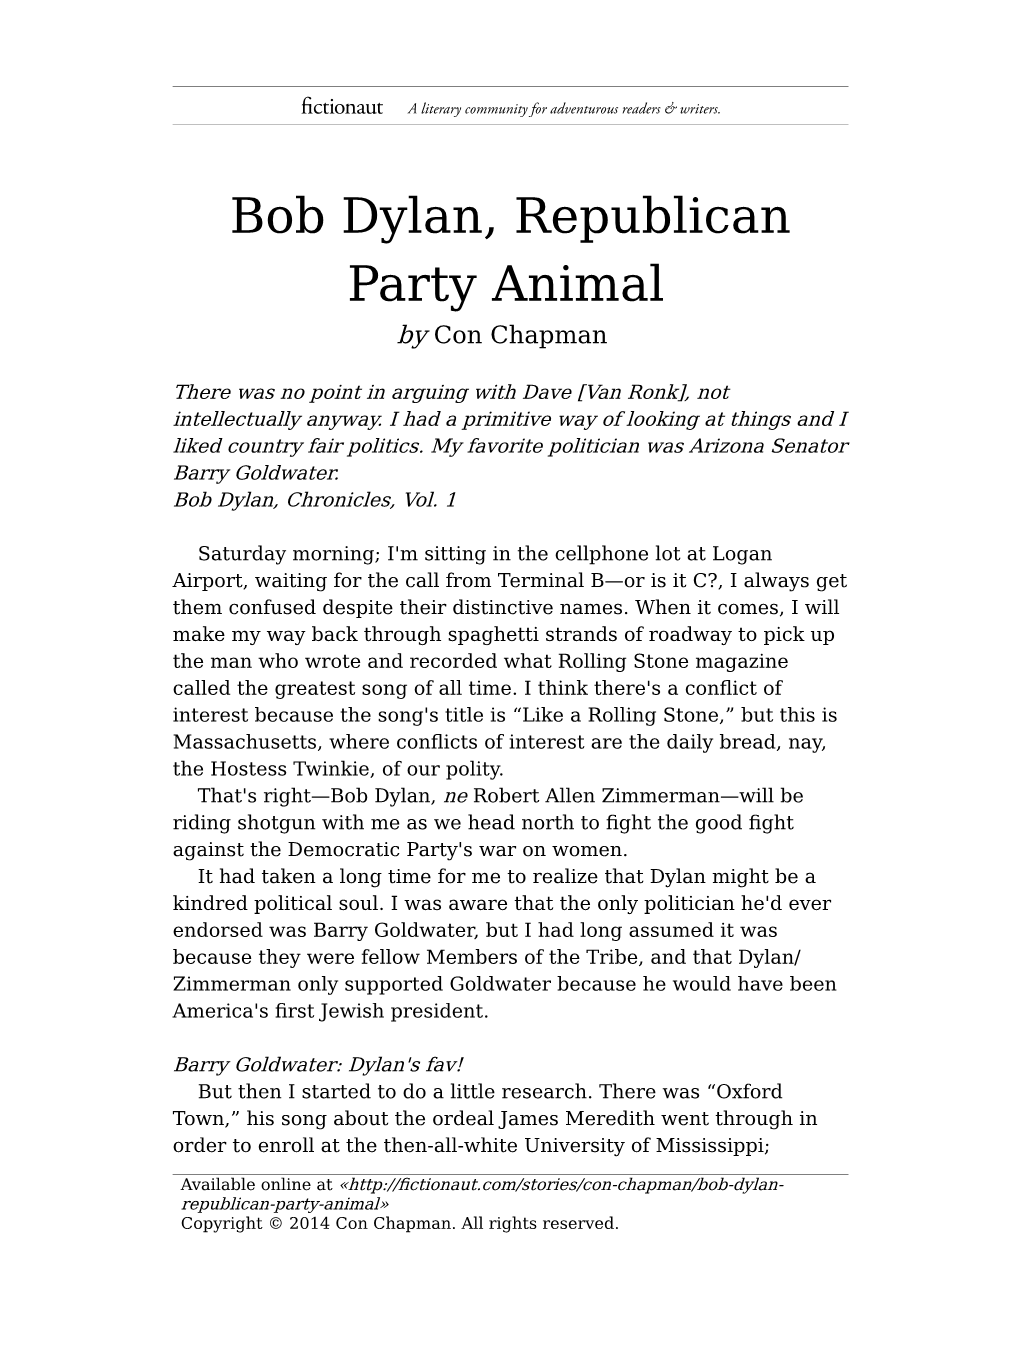 Bob Dylan, Republican Party Animal by Con Chapman